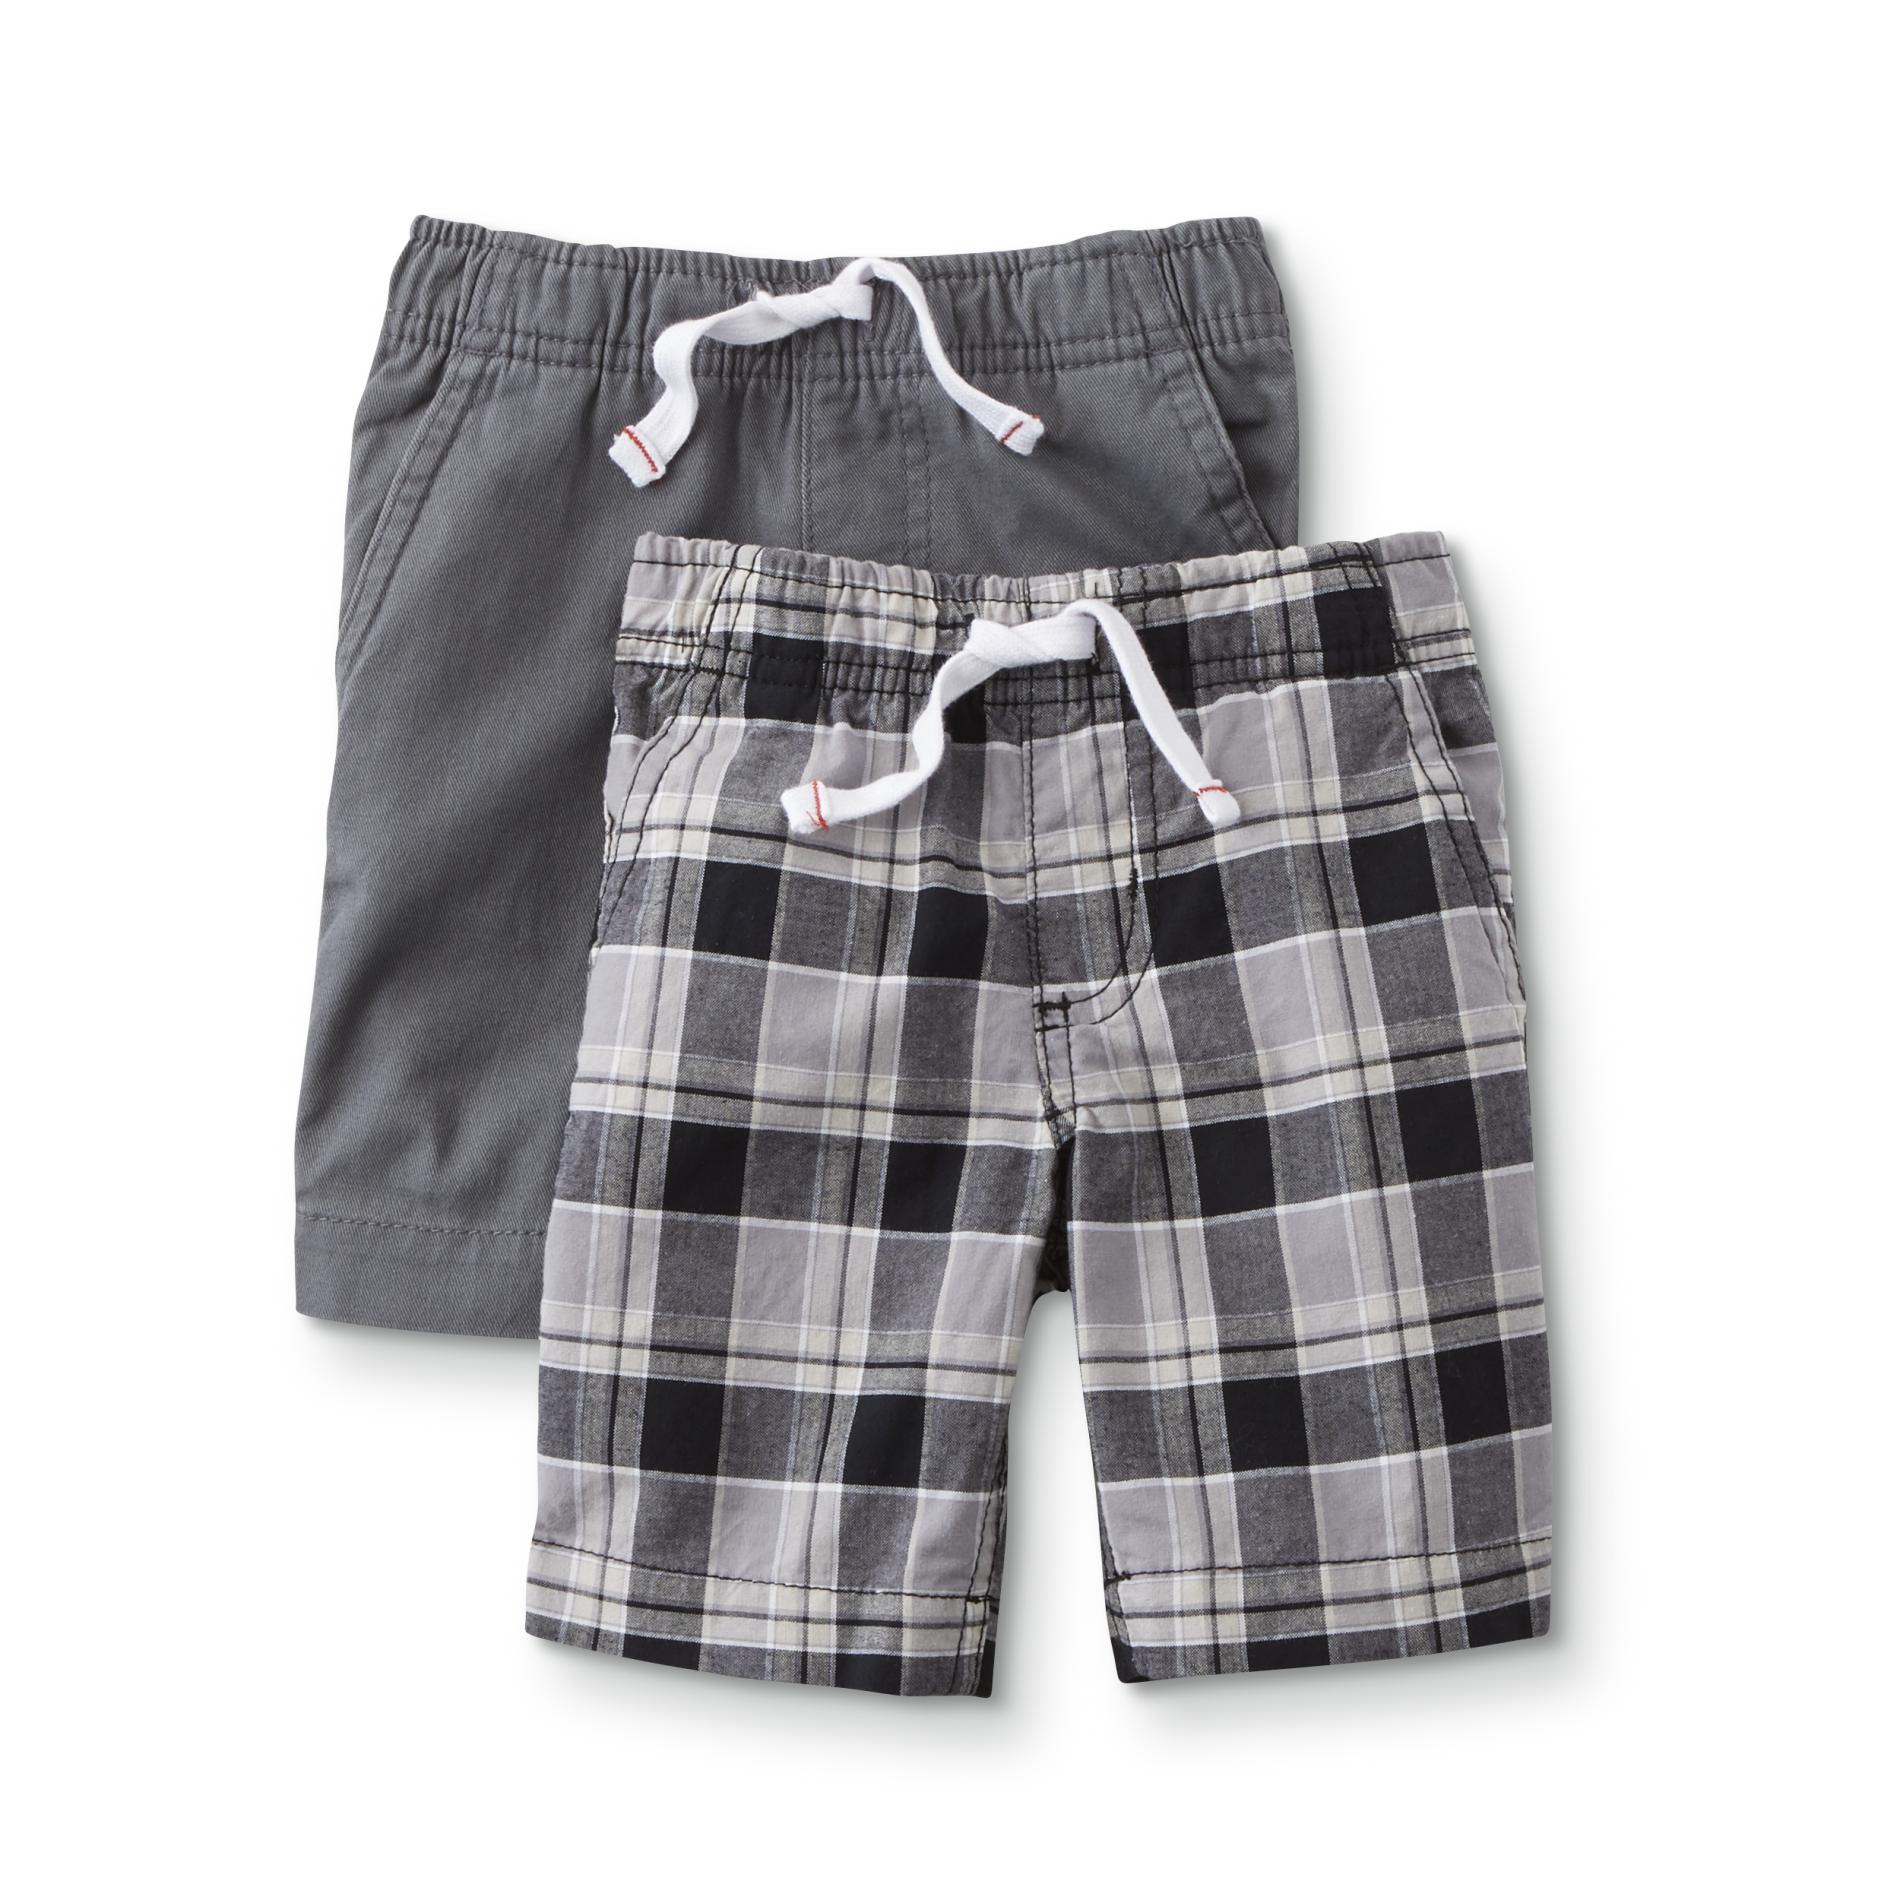 Toughskins Boys' 2-Pack Shorts - Solid & Plaid